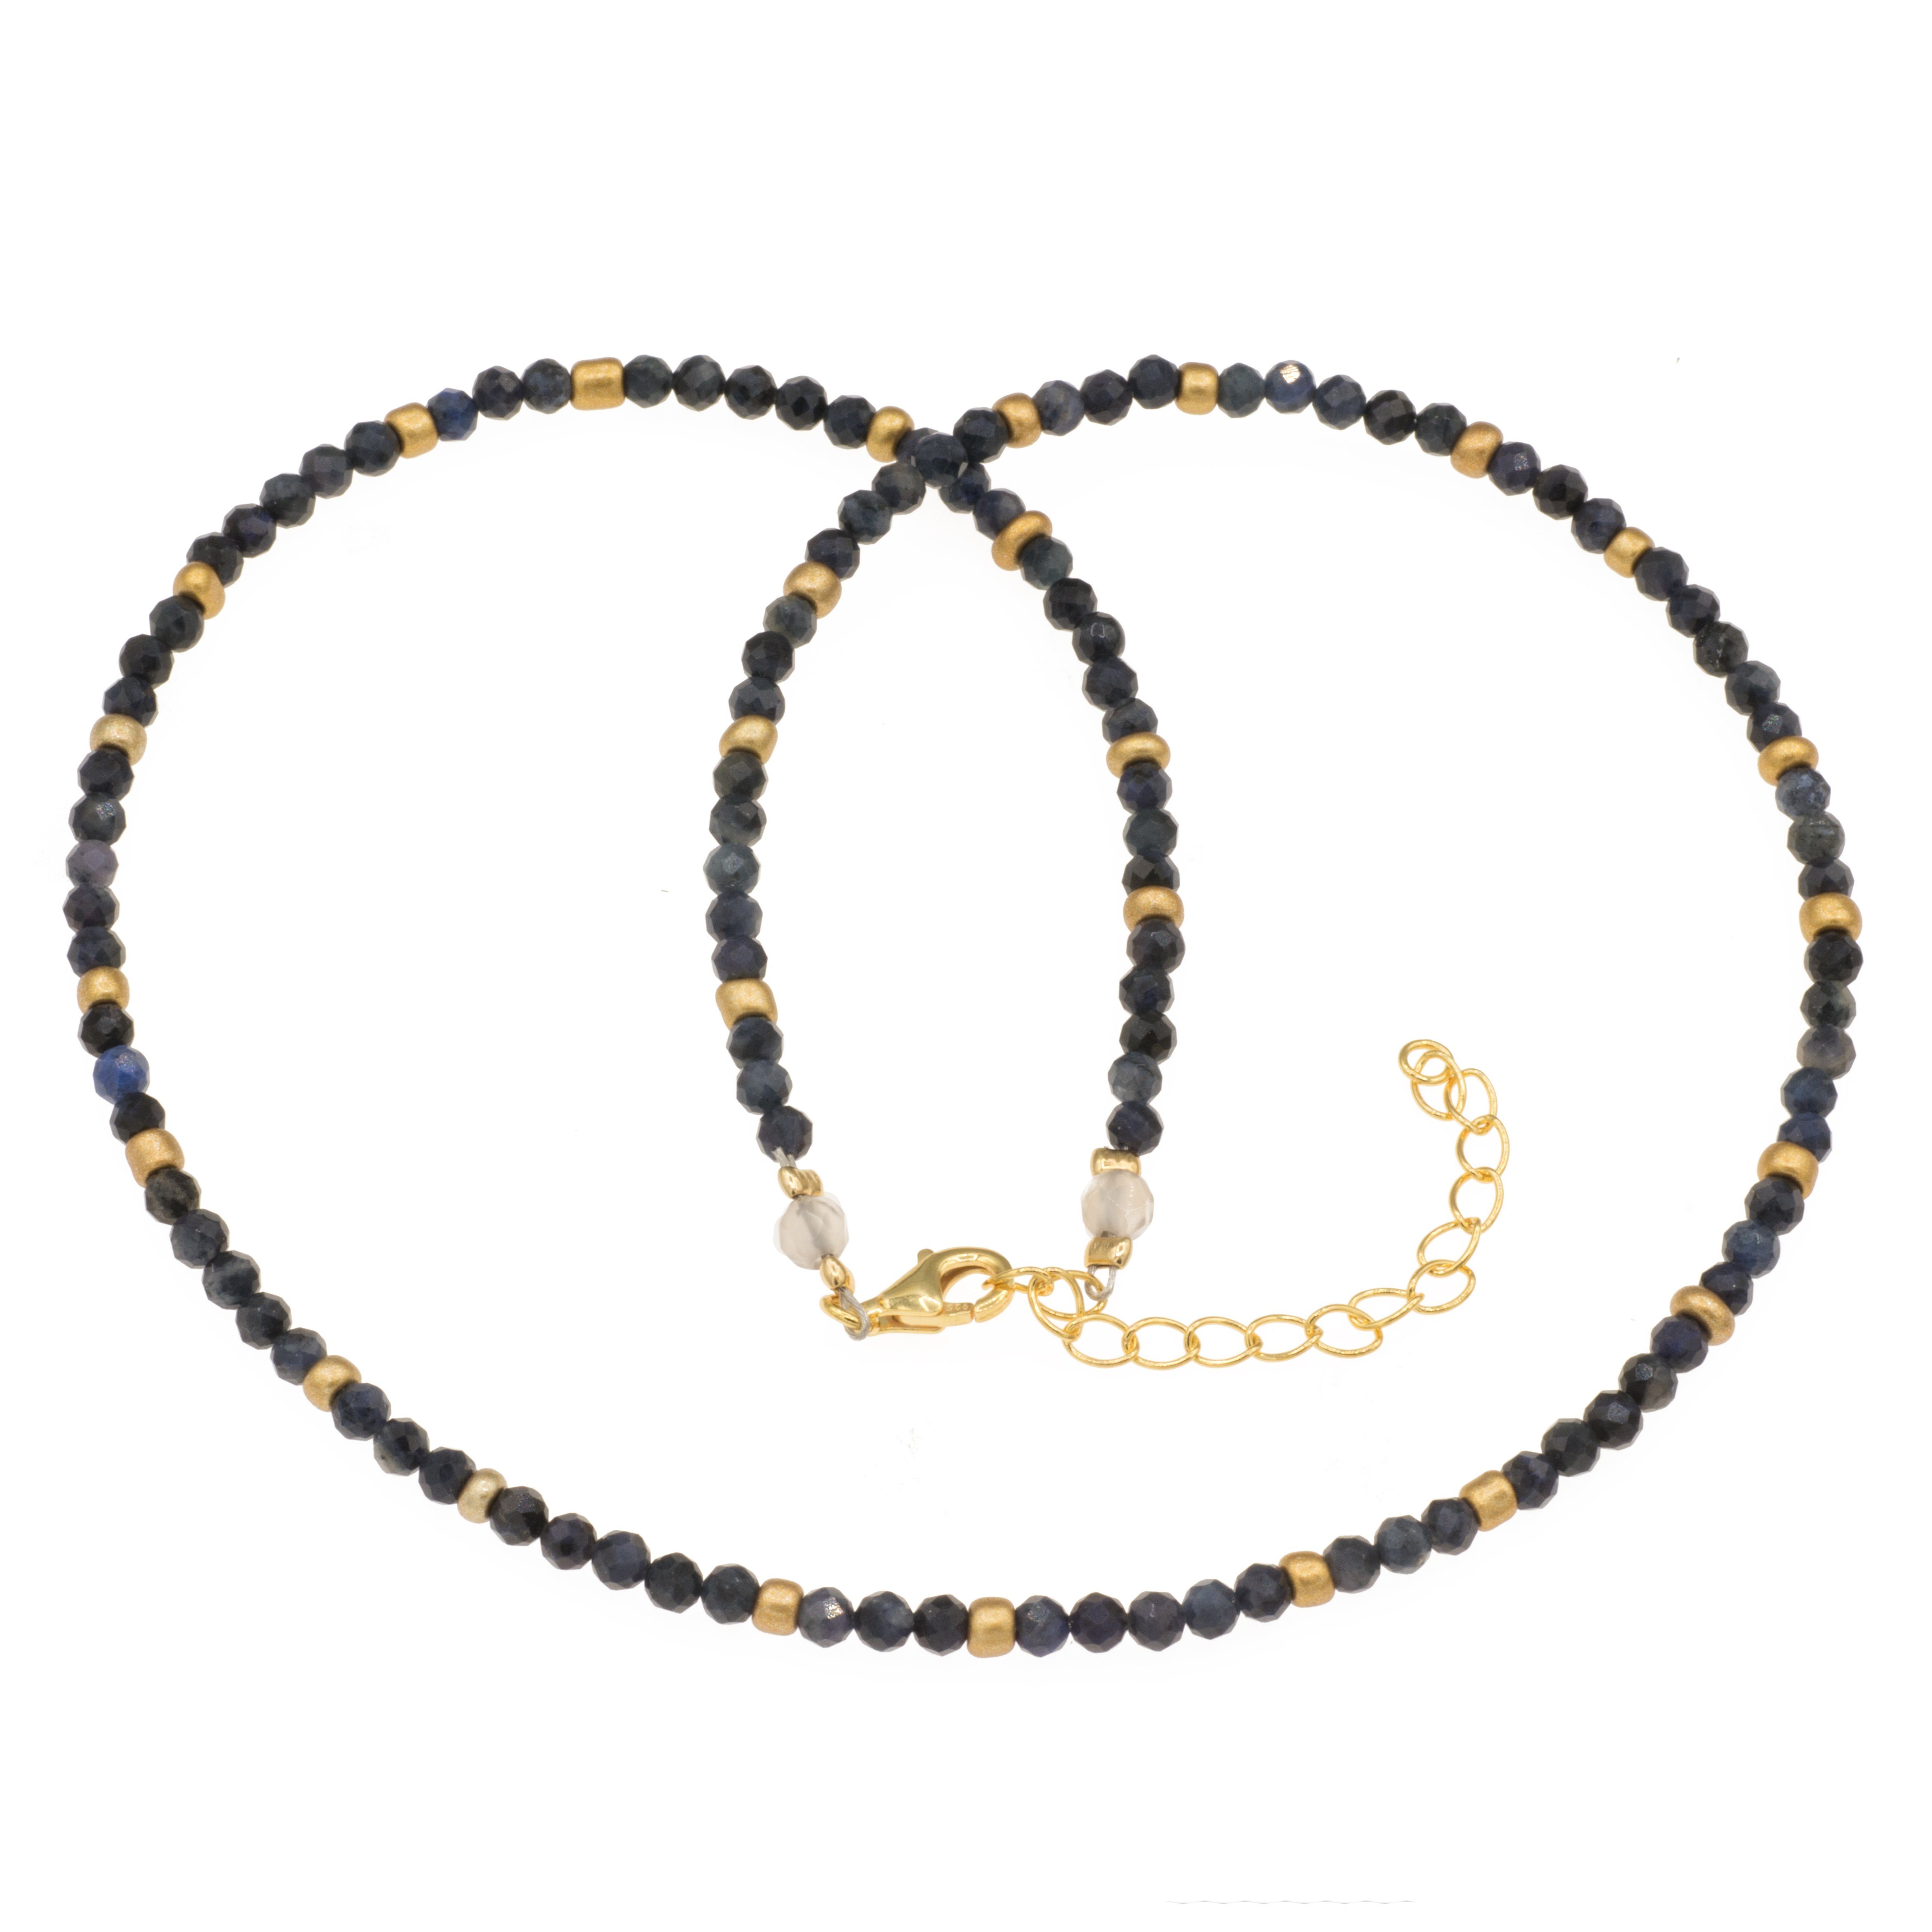 Bella Carina Perlenkette Kette mit echten Saphir Perlen 3 mm facettiert 42  - 47 cm, mit echten Saphir Edelstein Perlen